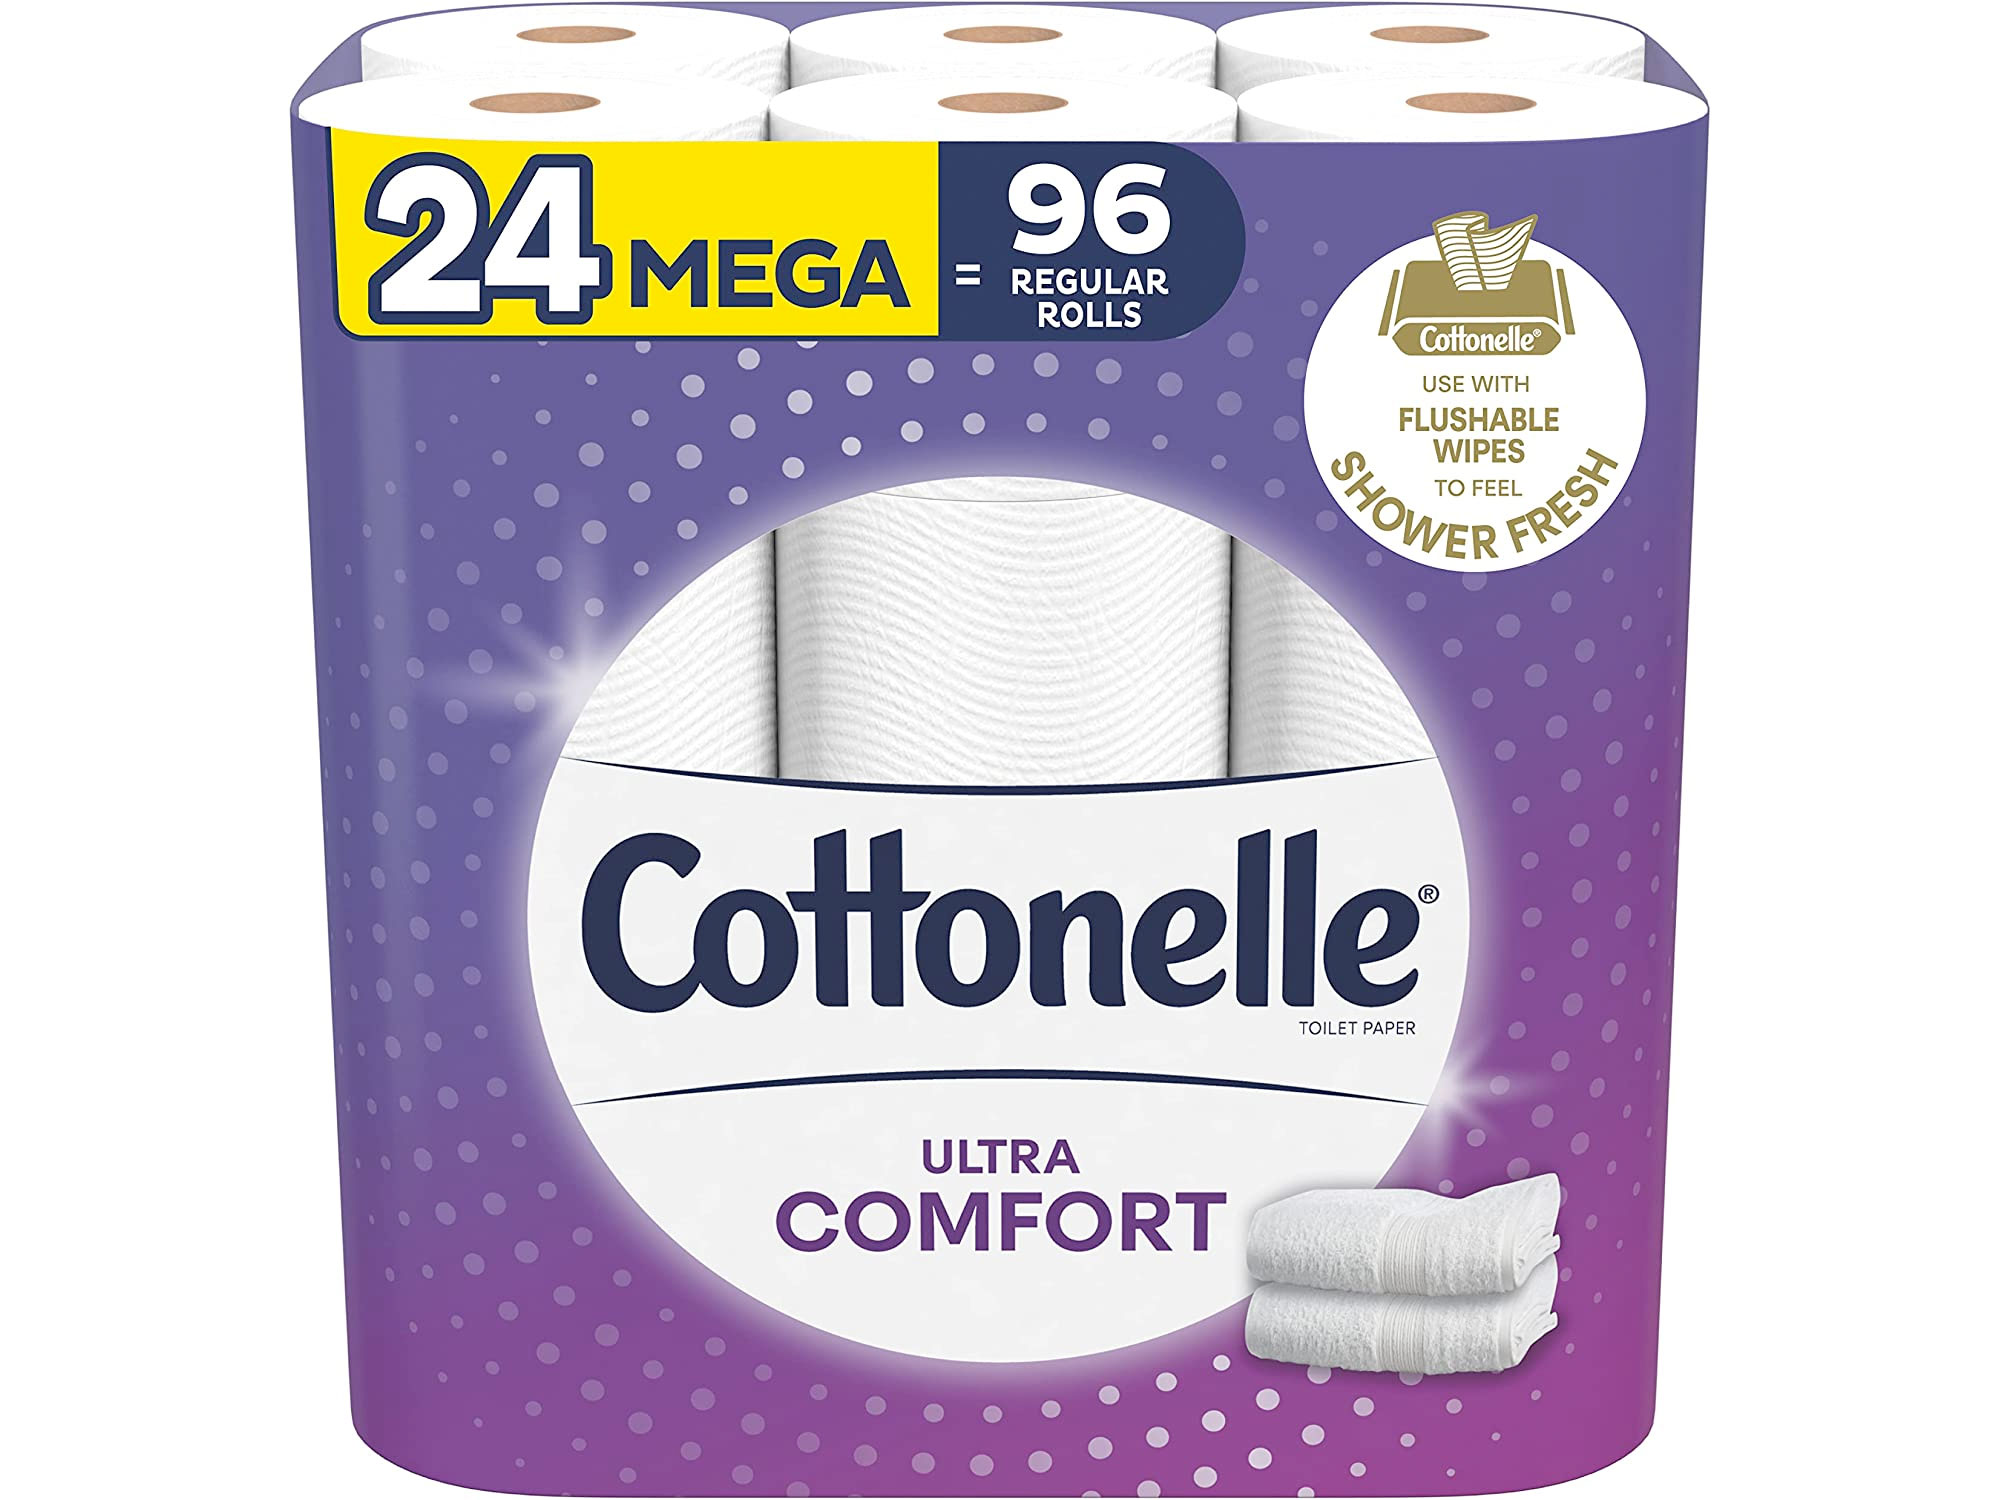 Amazon：Cottonelle Ultra Comfort Toilet Paper 24 Mega Rolls (96 Regular Rolls)只賣$15.32